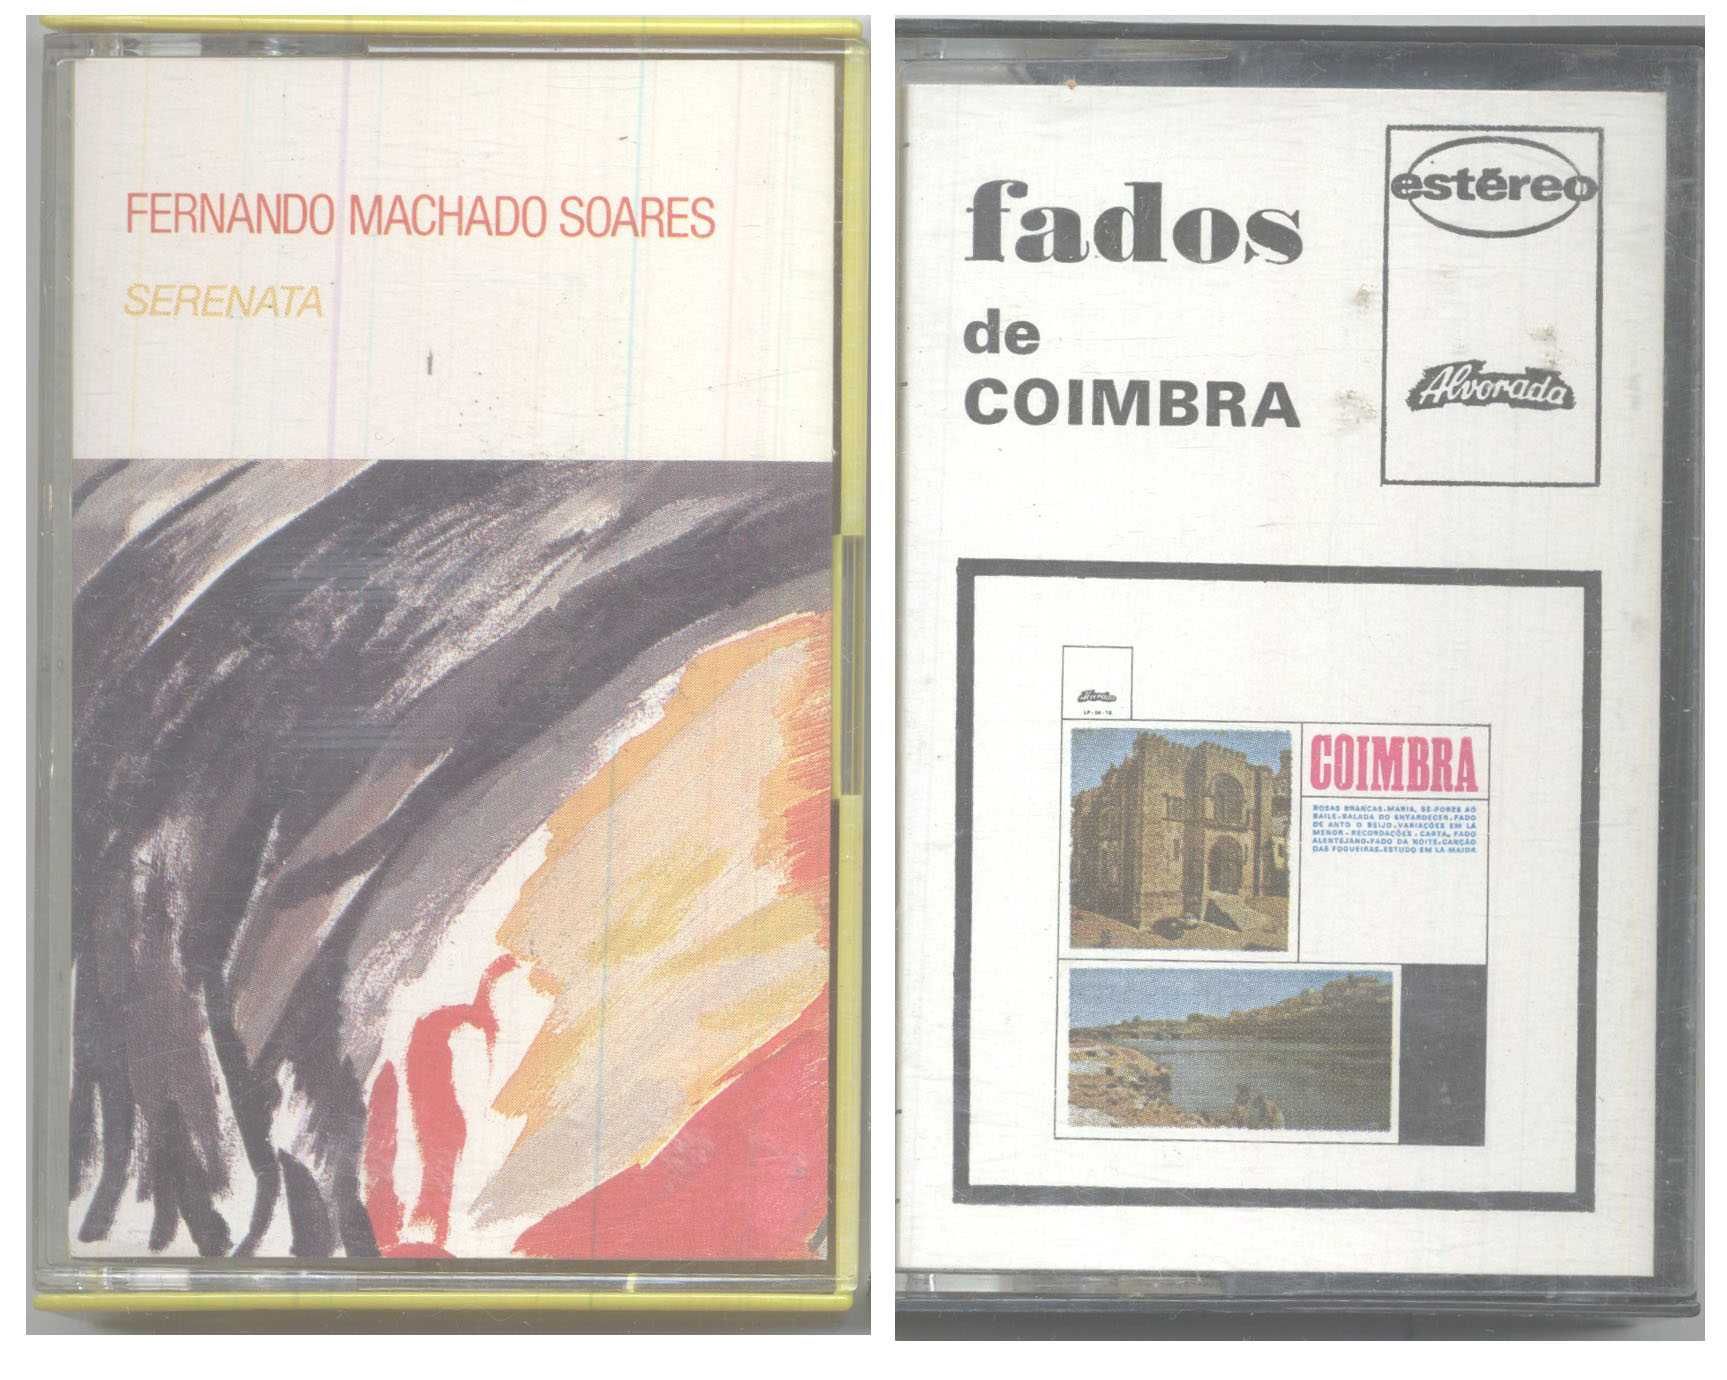 Fado De Coimbra LPs EPs Singles CDs Cassetes